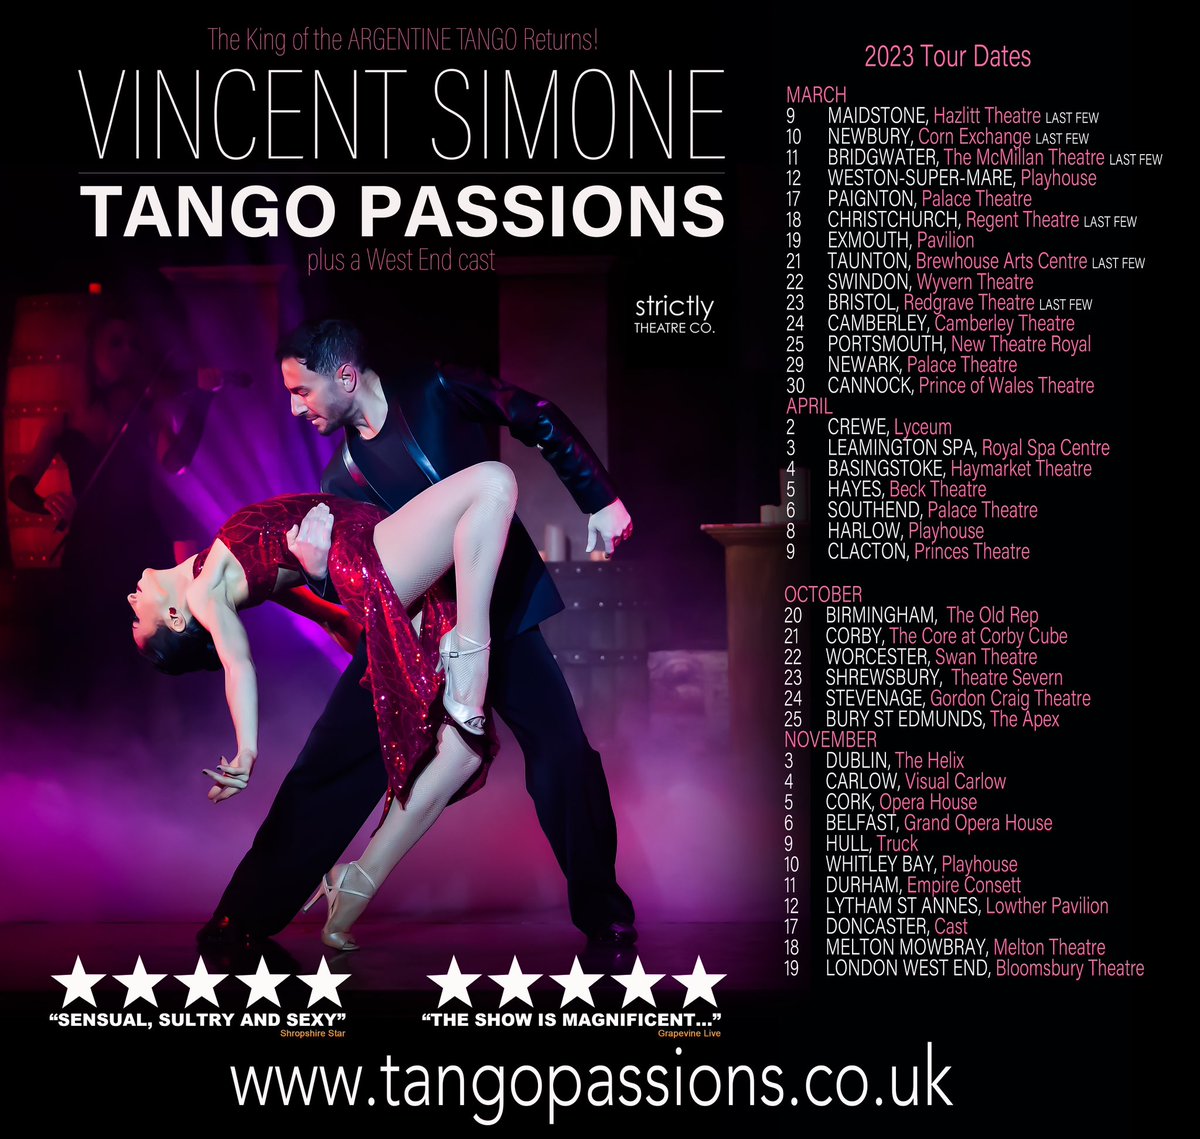 @vincentsimone #tango #argentinetango tangopassions.co.Uk